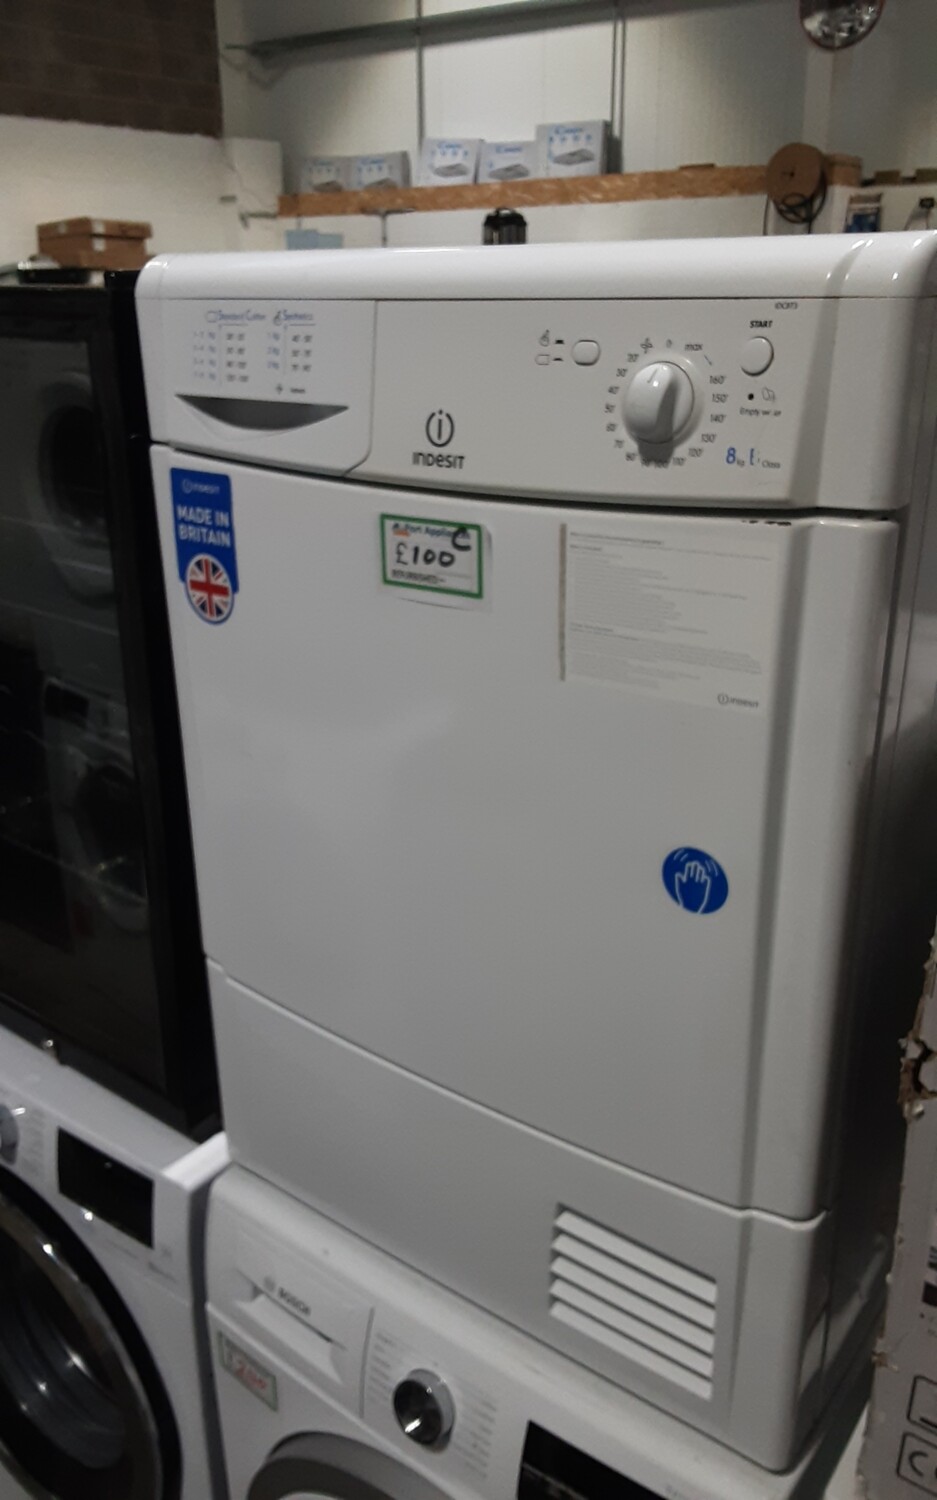 Indesit 8kg Condenser Dryer White Refurbished 6 Months Guarantee 